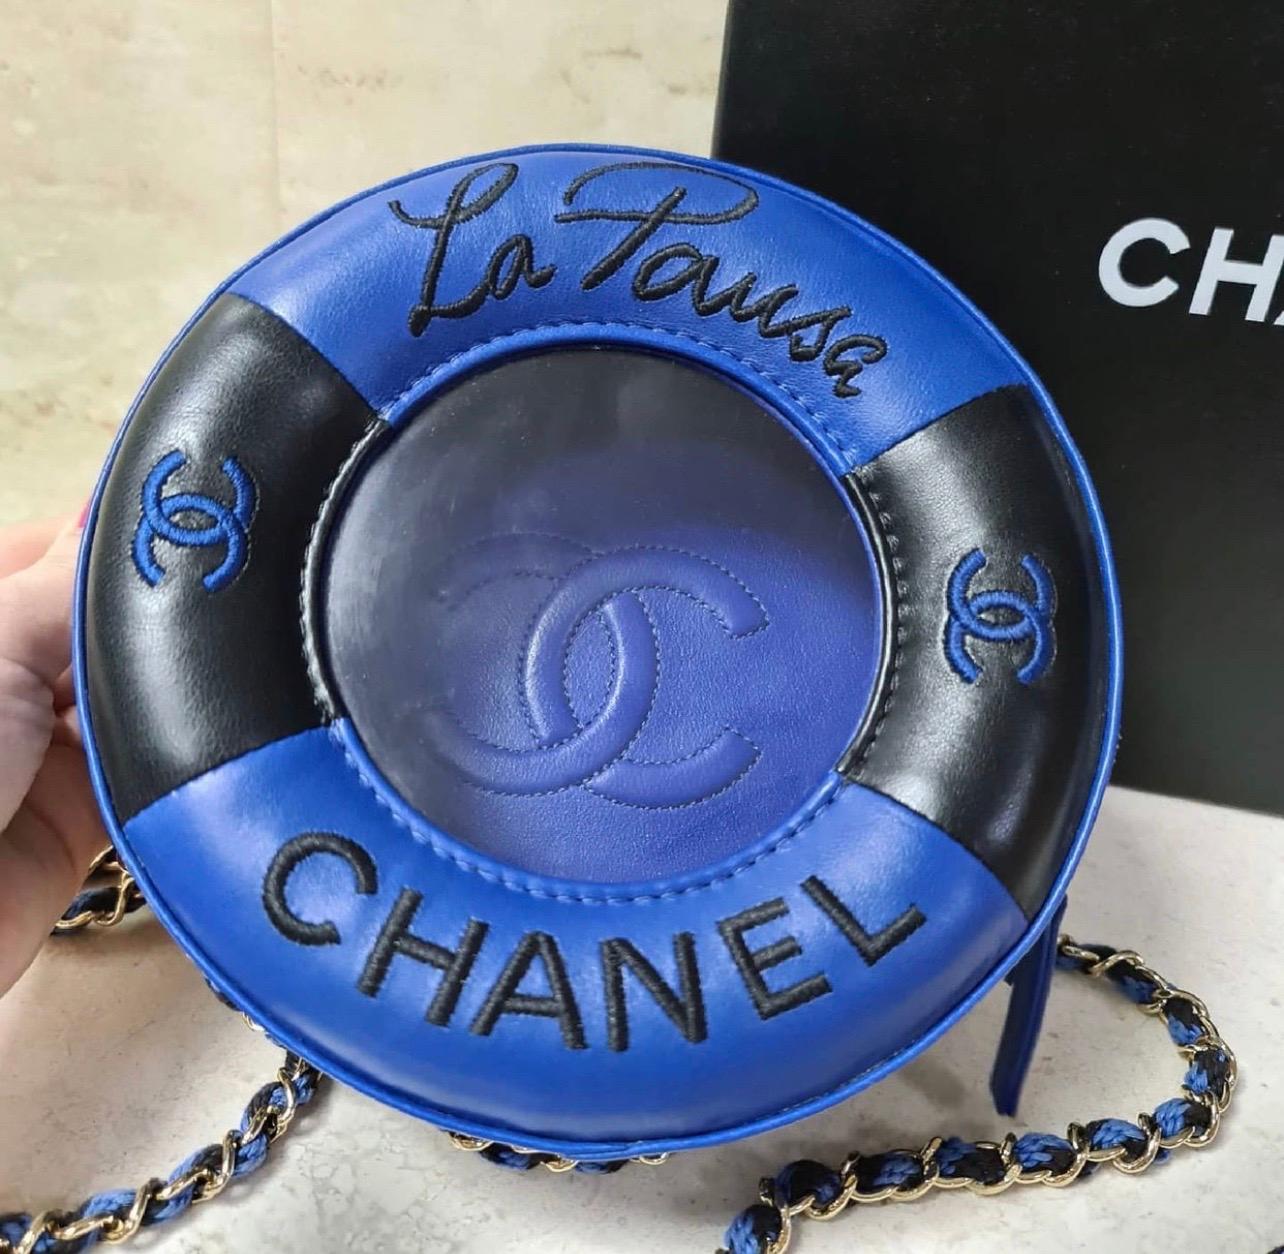 Chanel Lifesaver - For Sale on 1stDibs  chanel lifebuoy, chanel lifesaver  purse, chanel coco lifesaver round bag